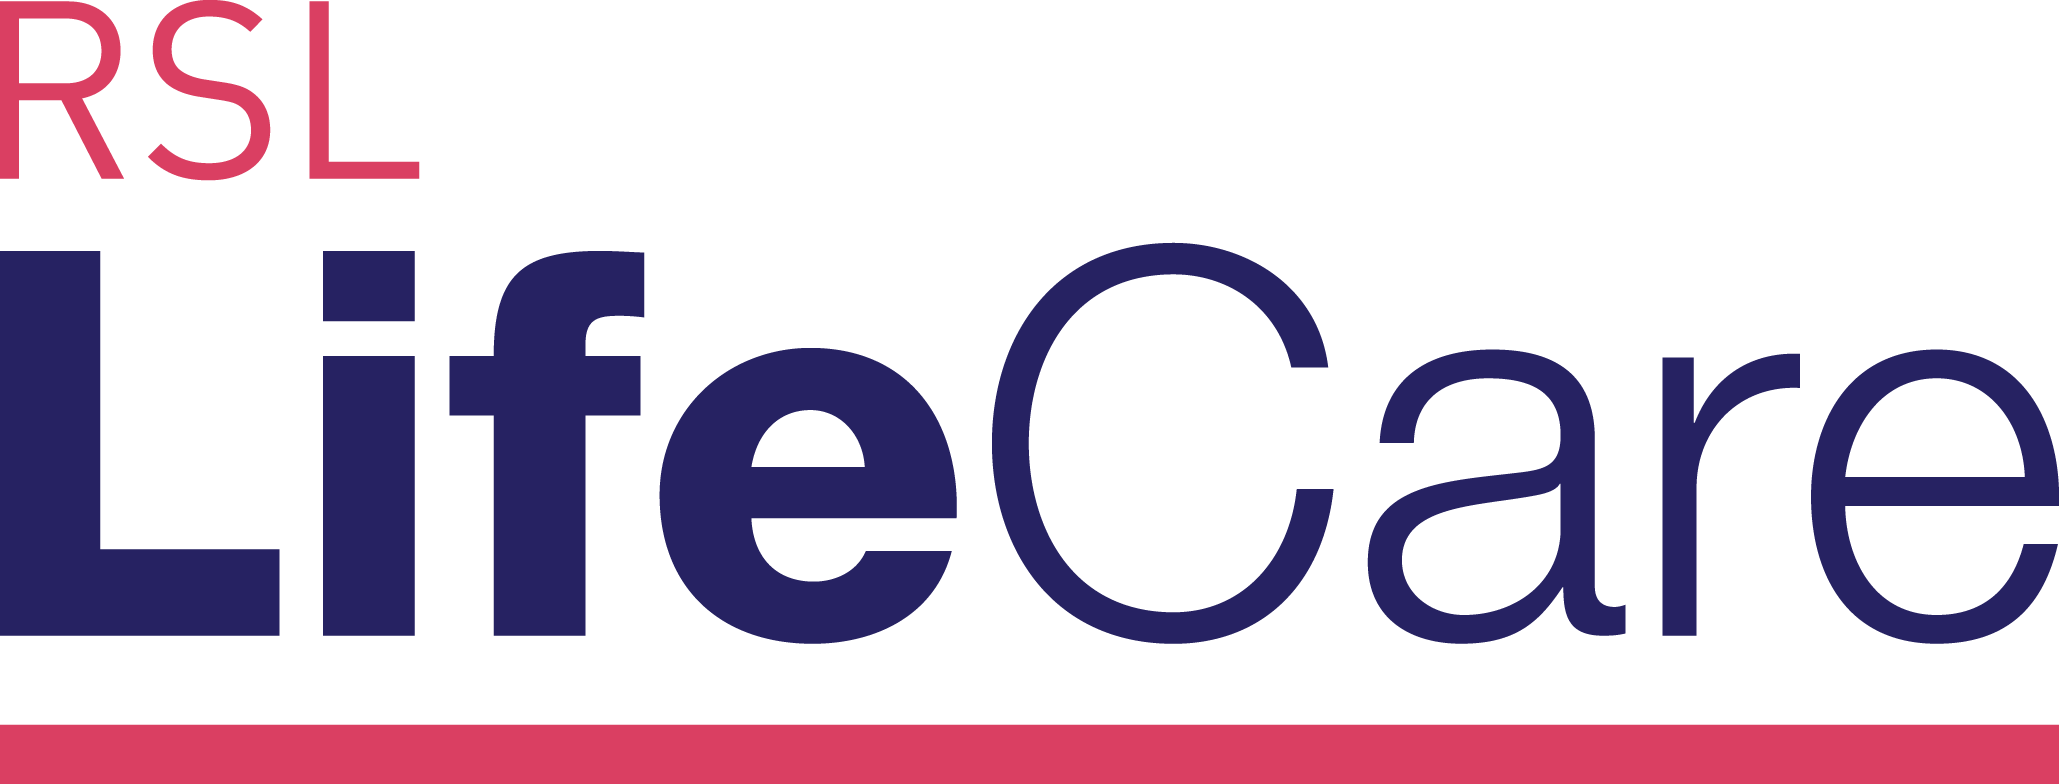 RSL LifeCare John Edmondson VC Gardens logo